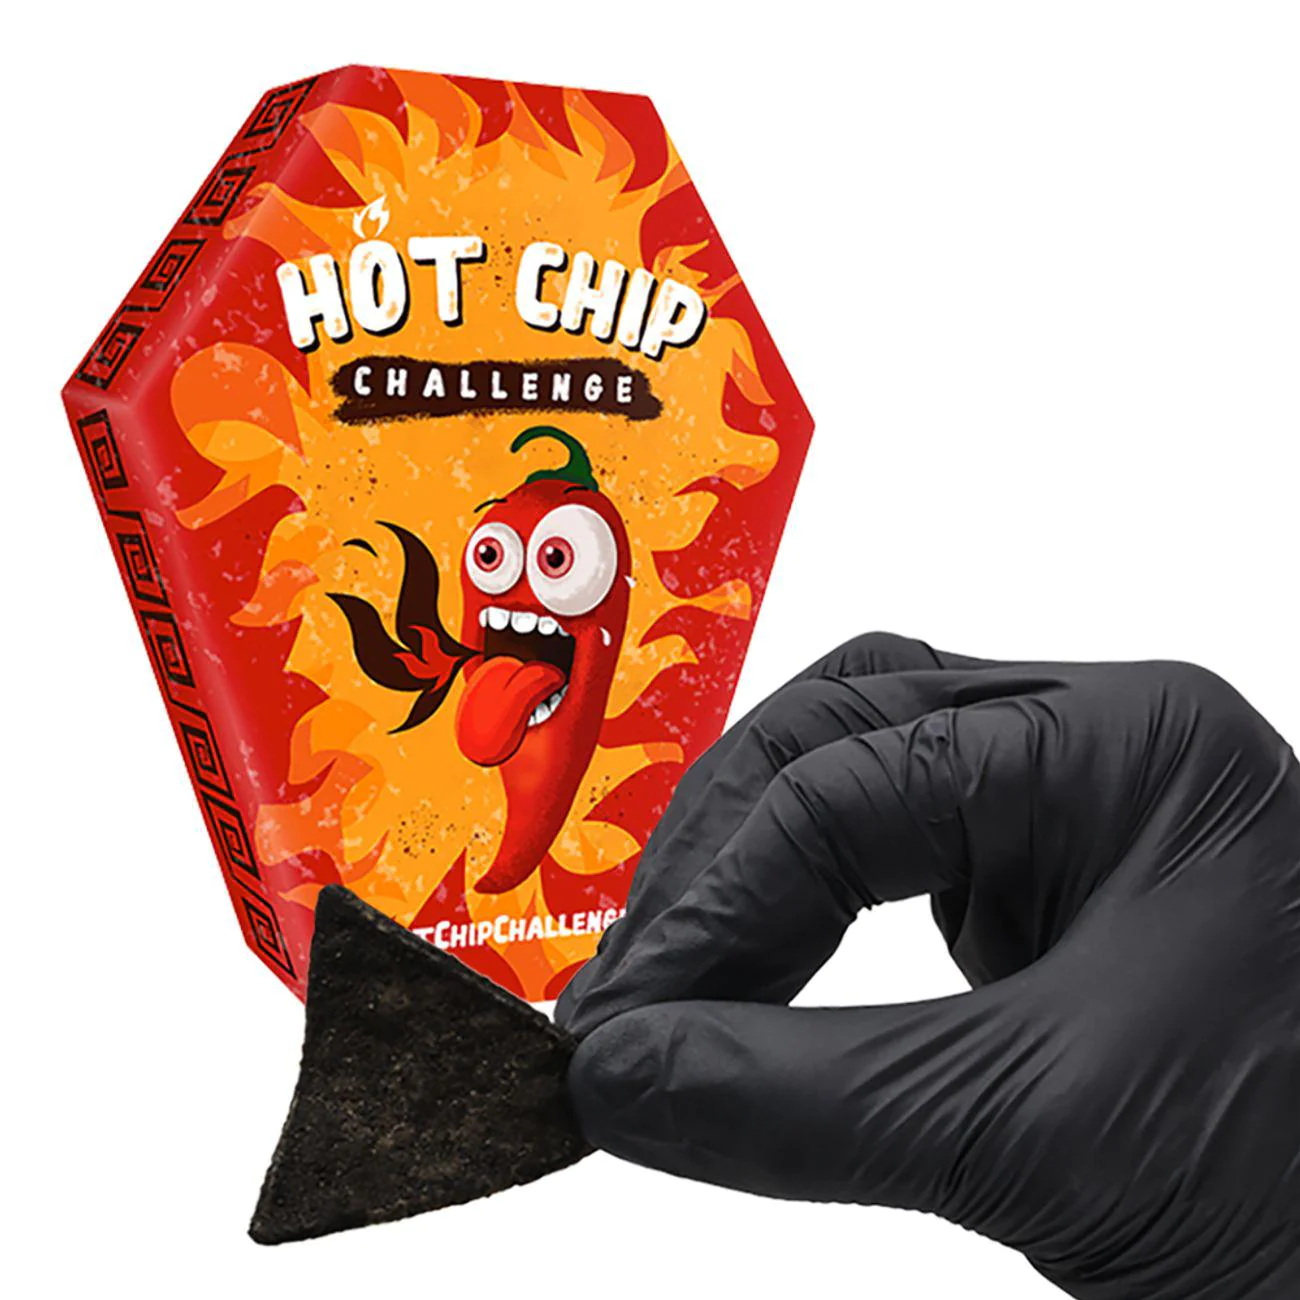 Hot Chip - Hot Chip Challenge - 3 g